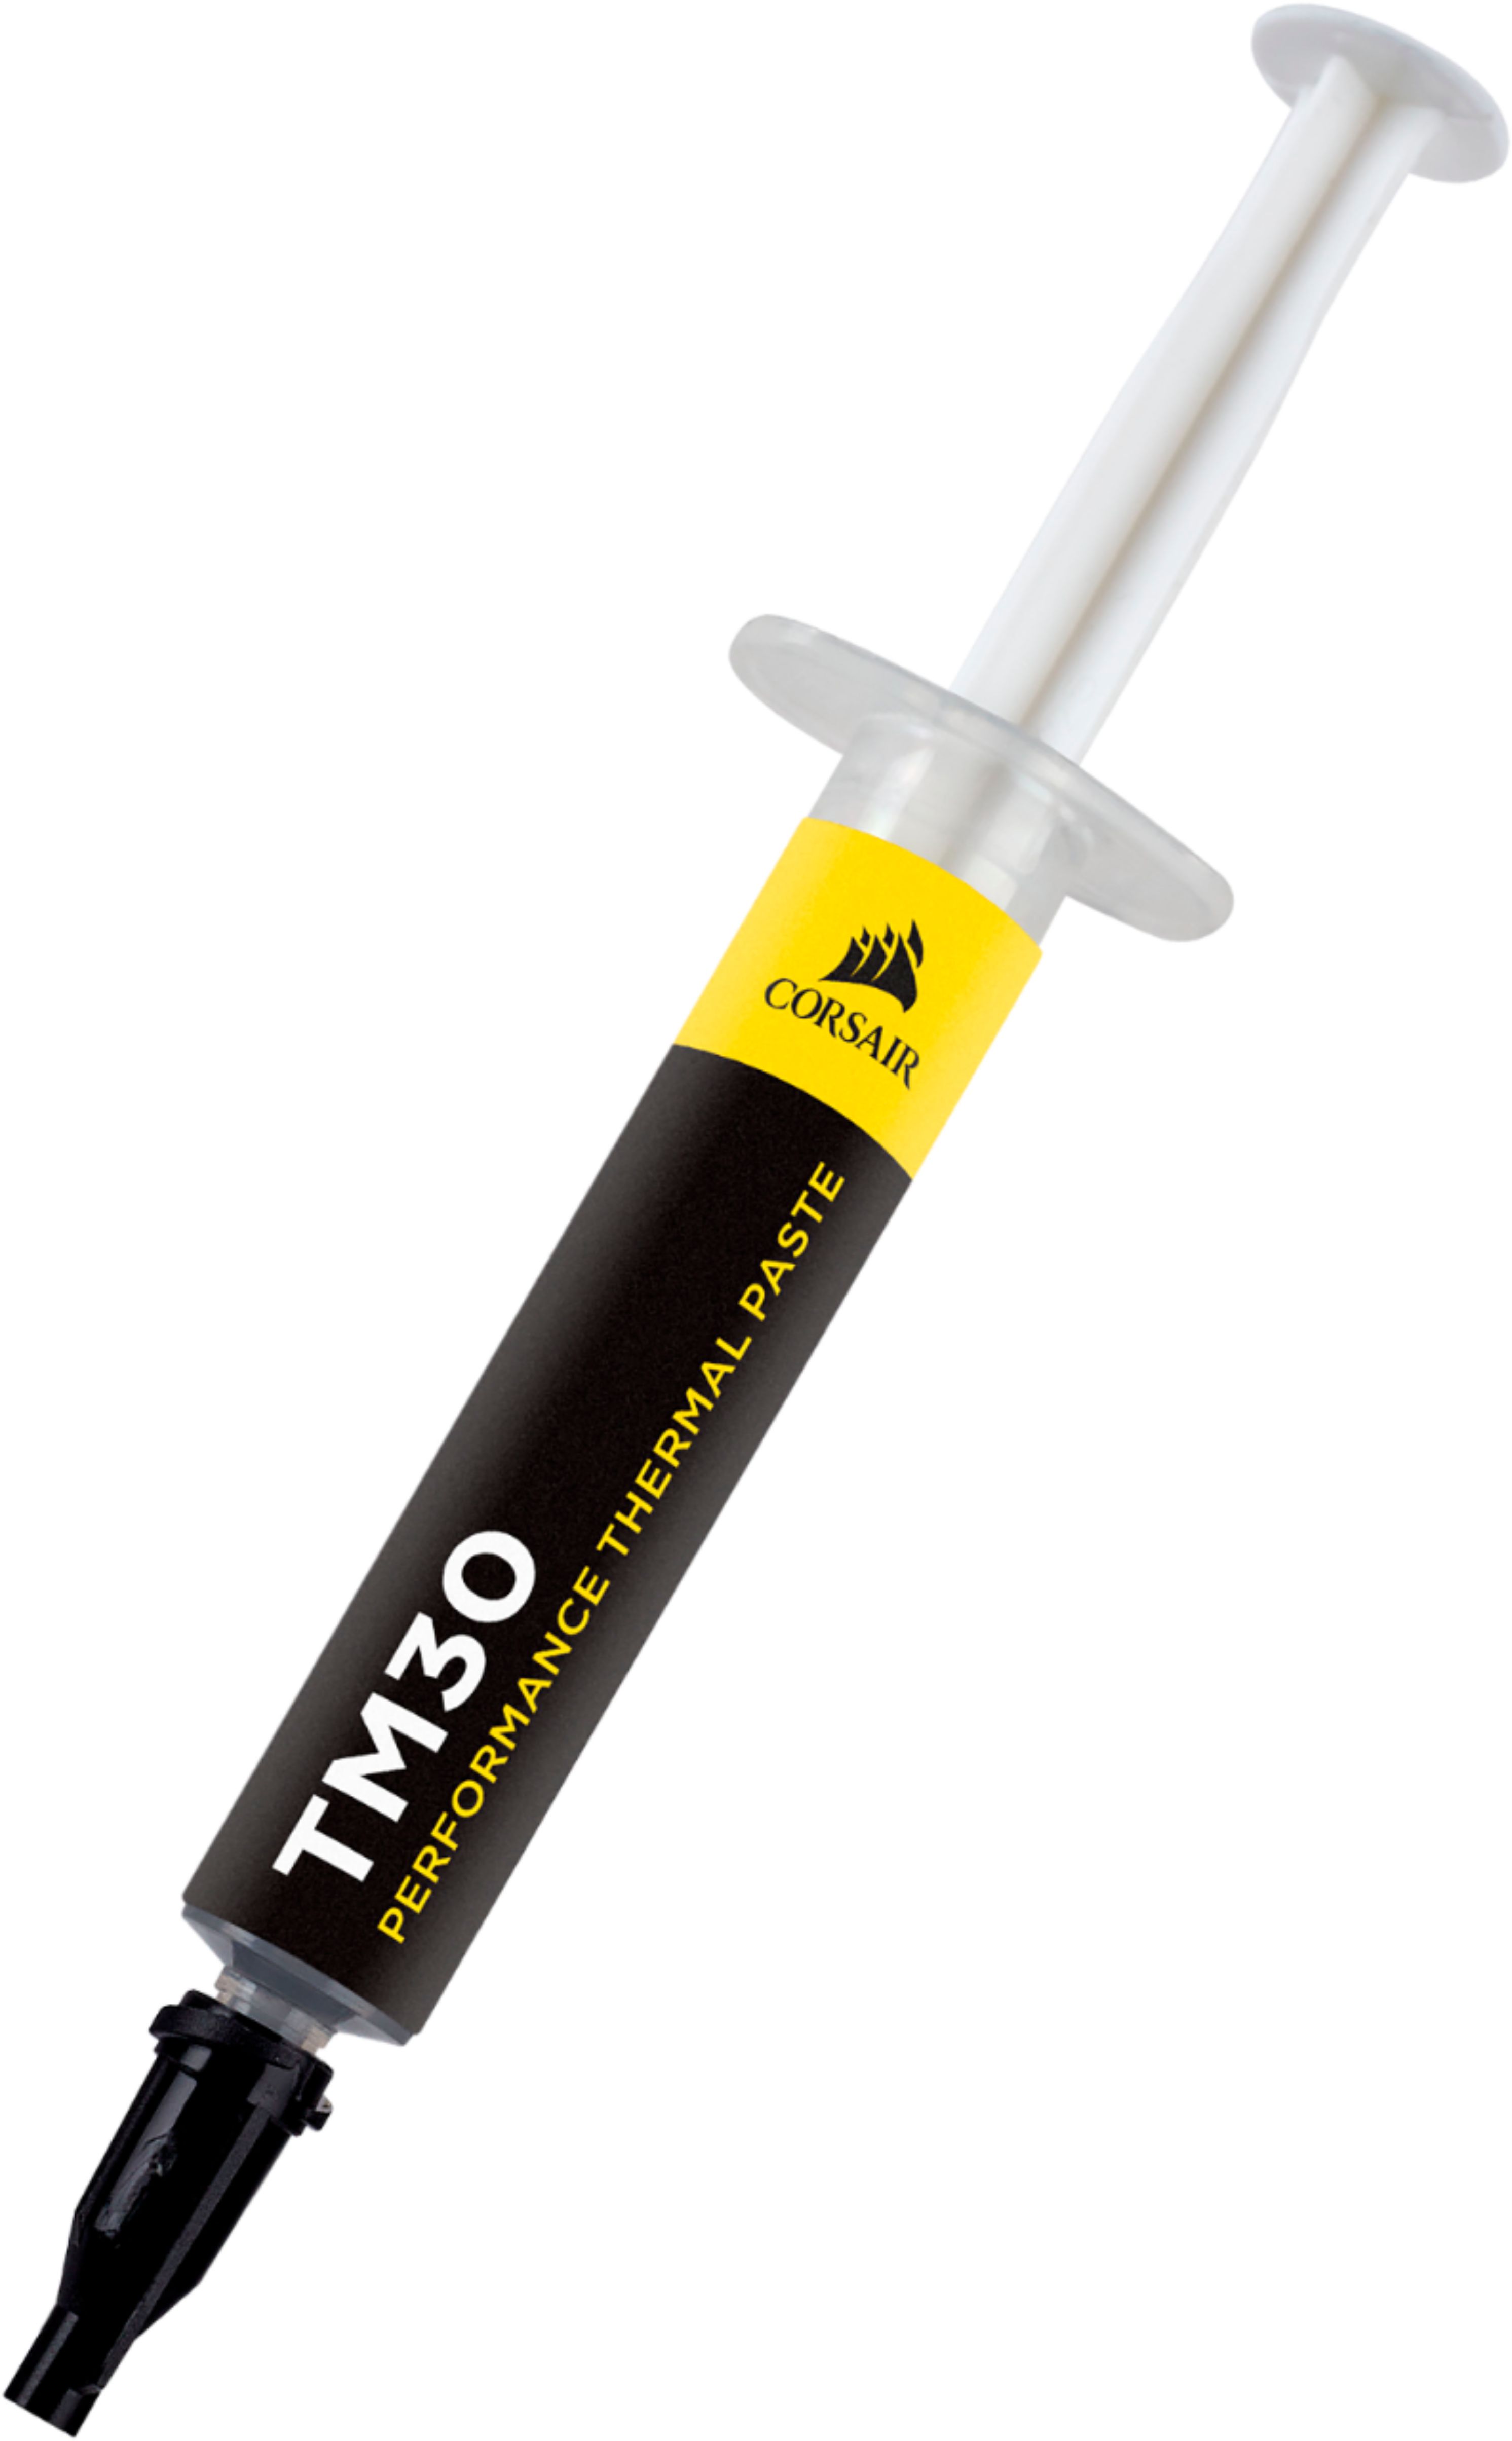 Corsair - TM30 Performance Thermal Paste